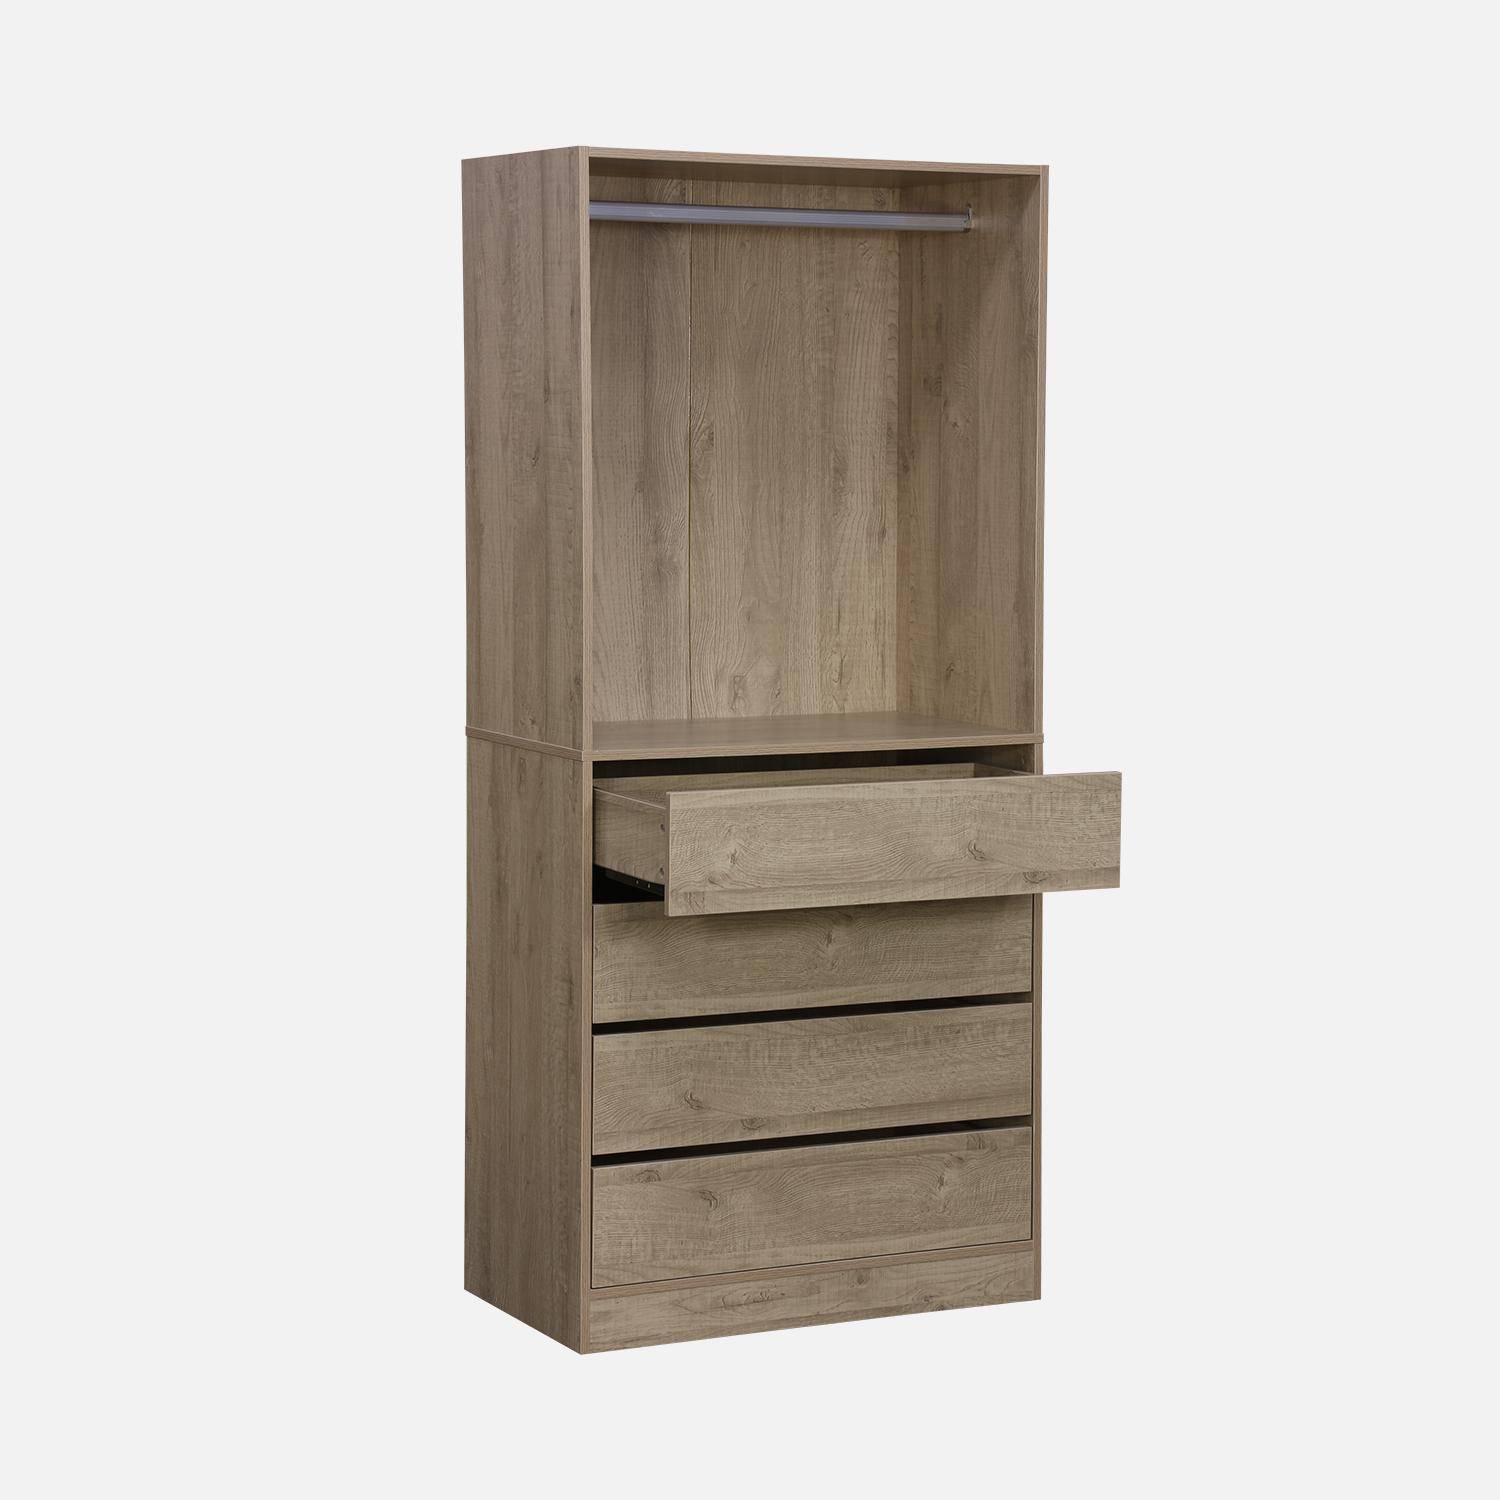 Modular open wardrobe drawer and rail unit, 60x45x180cm, Modulo, 4 drawers, 1 clothes rail, Natural,sweeek,Photo7